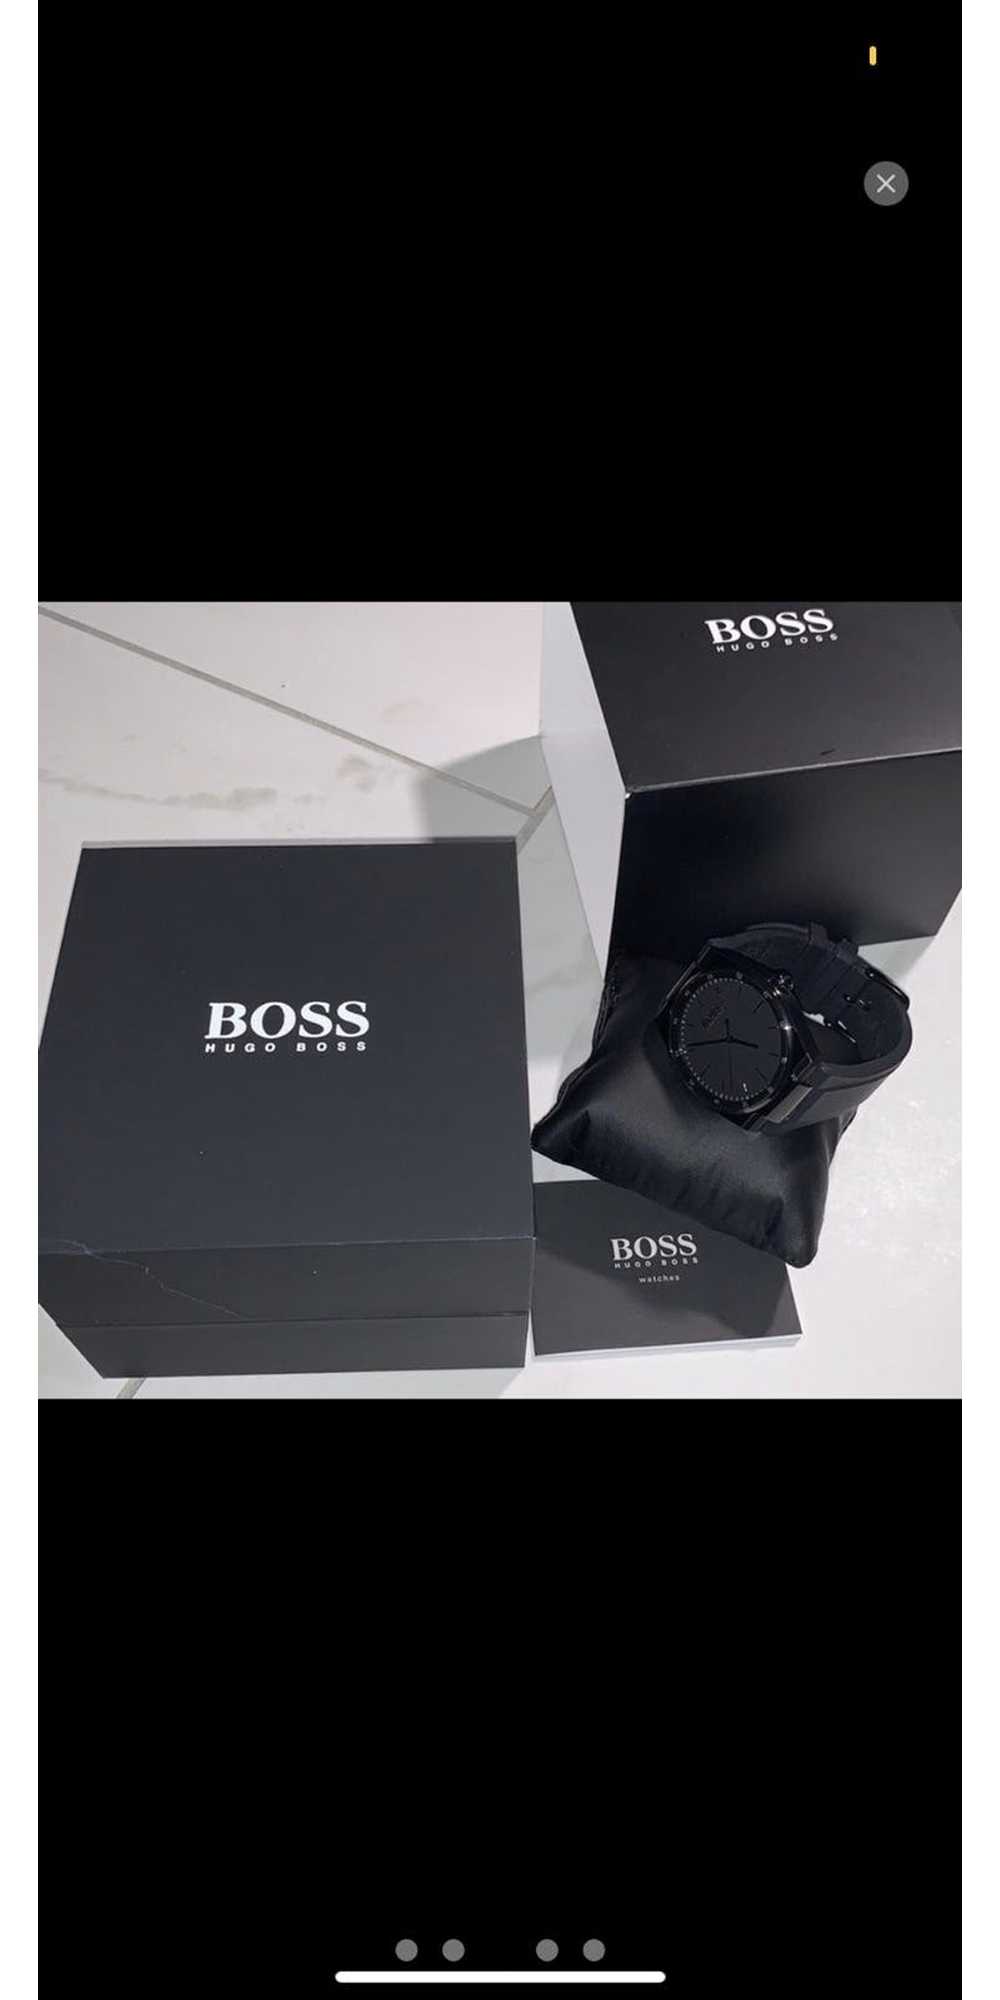 Hugo Boss Hugo boss watch - image 2